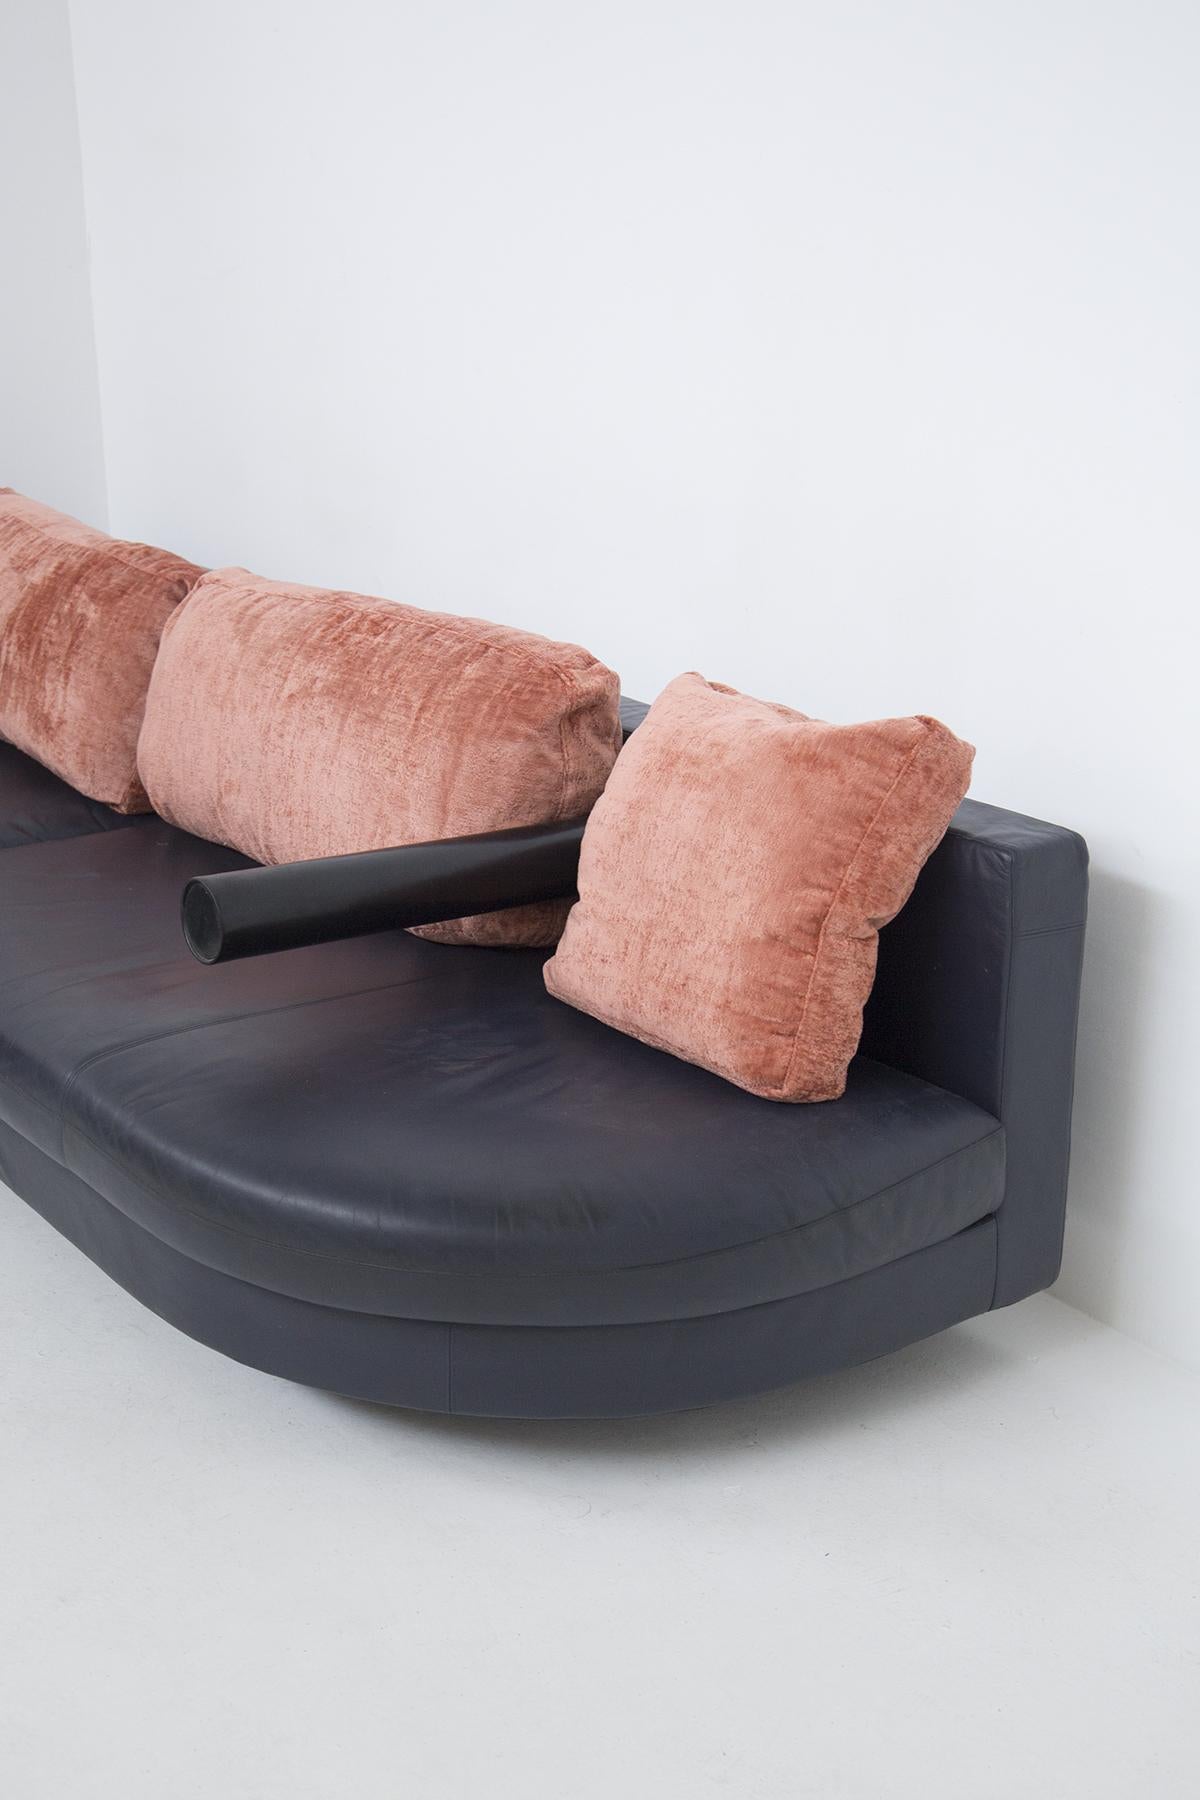 Mid-Century Modern Antonio Citterio Leather Corner Sofa for B&B Italia For Sale